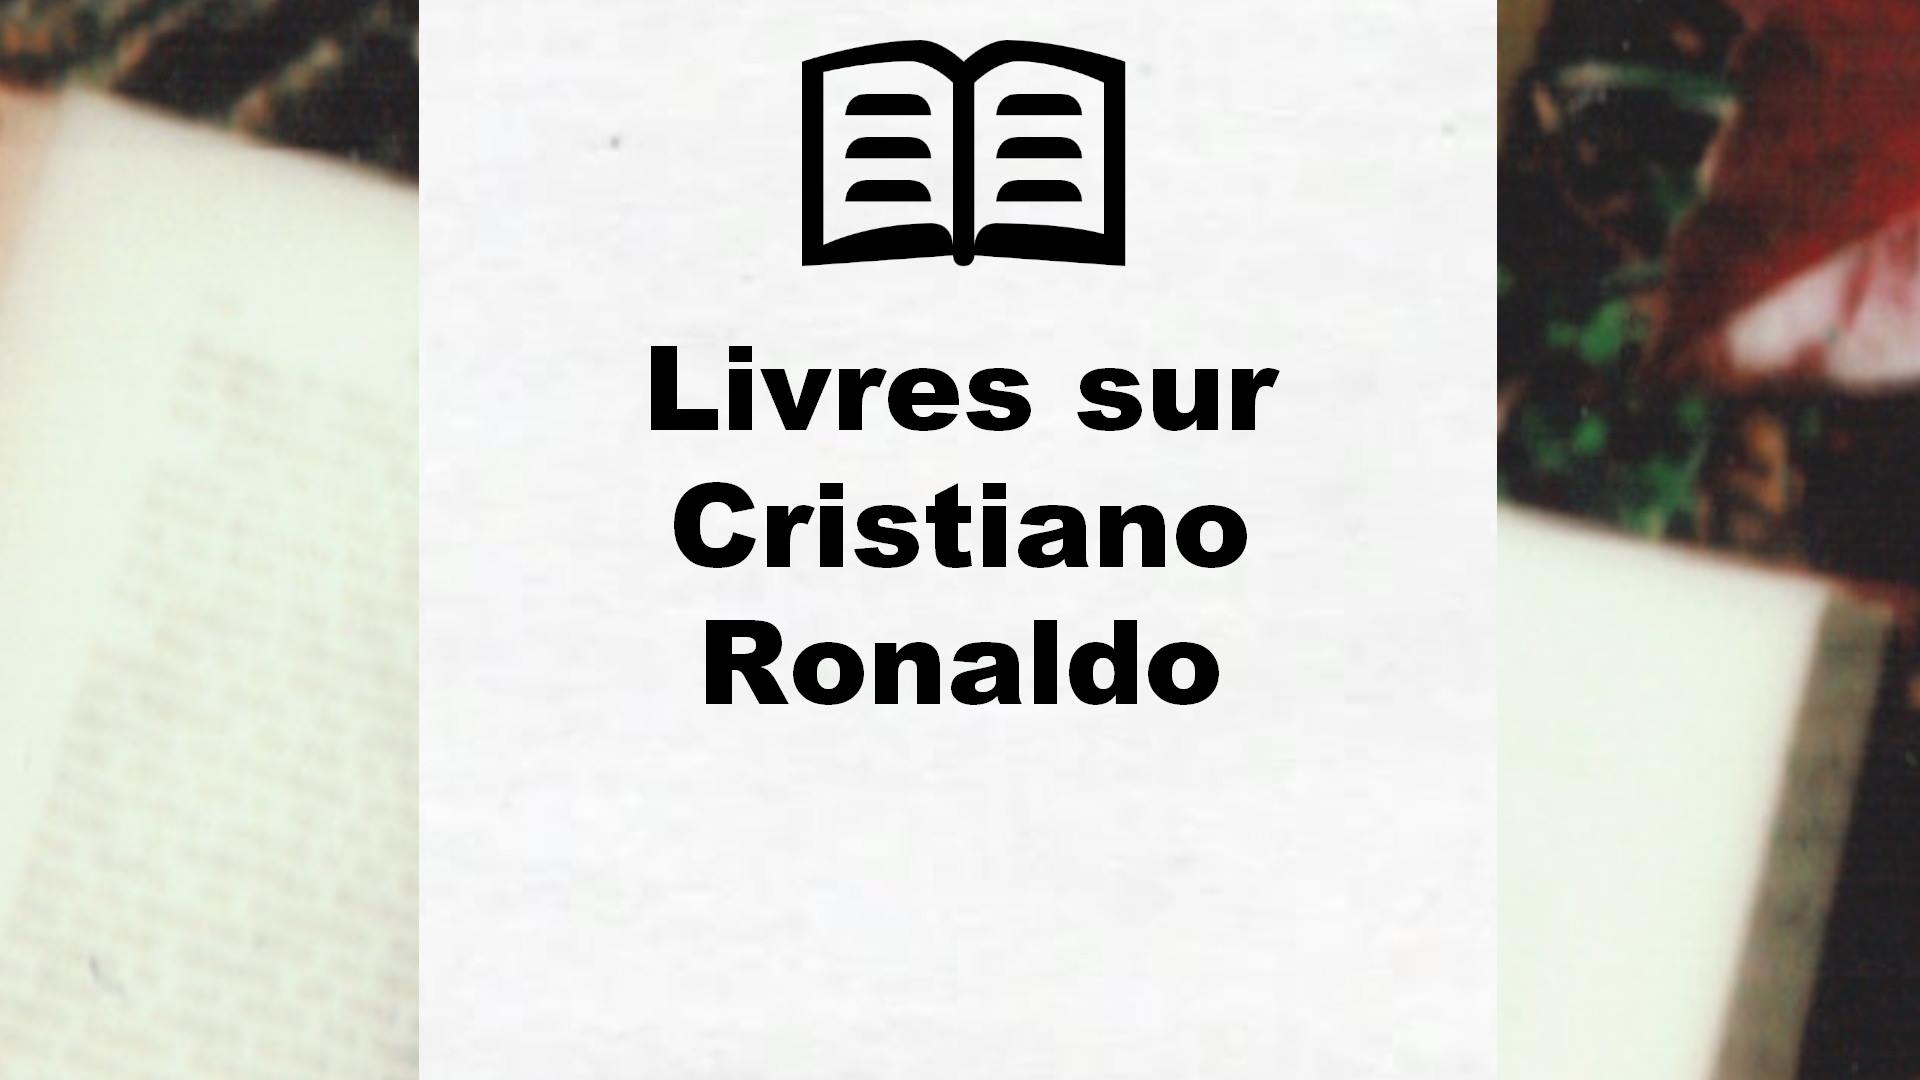 Livres sur Cristiano Ronaldo